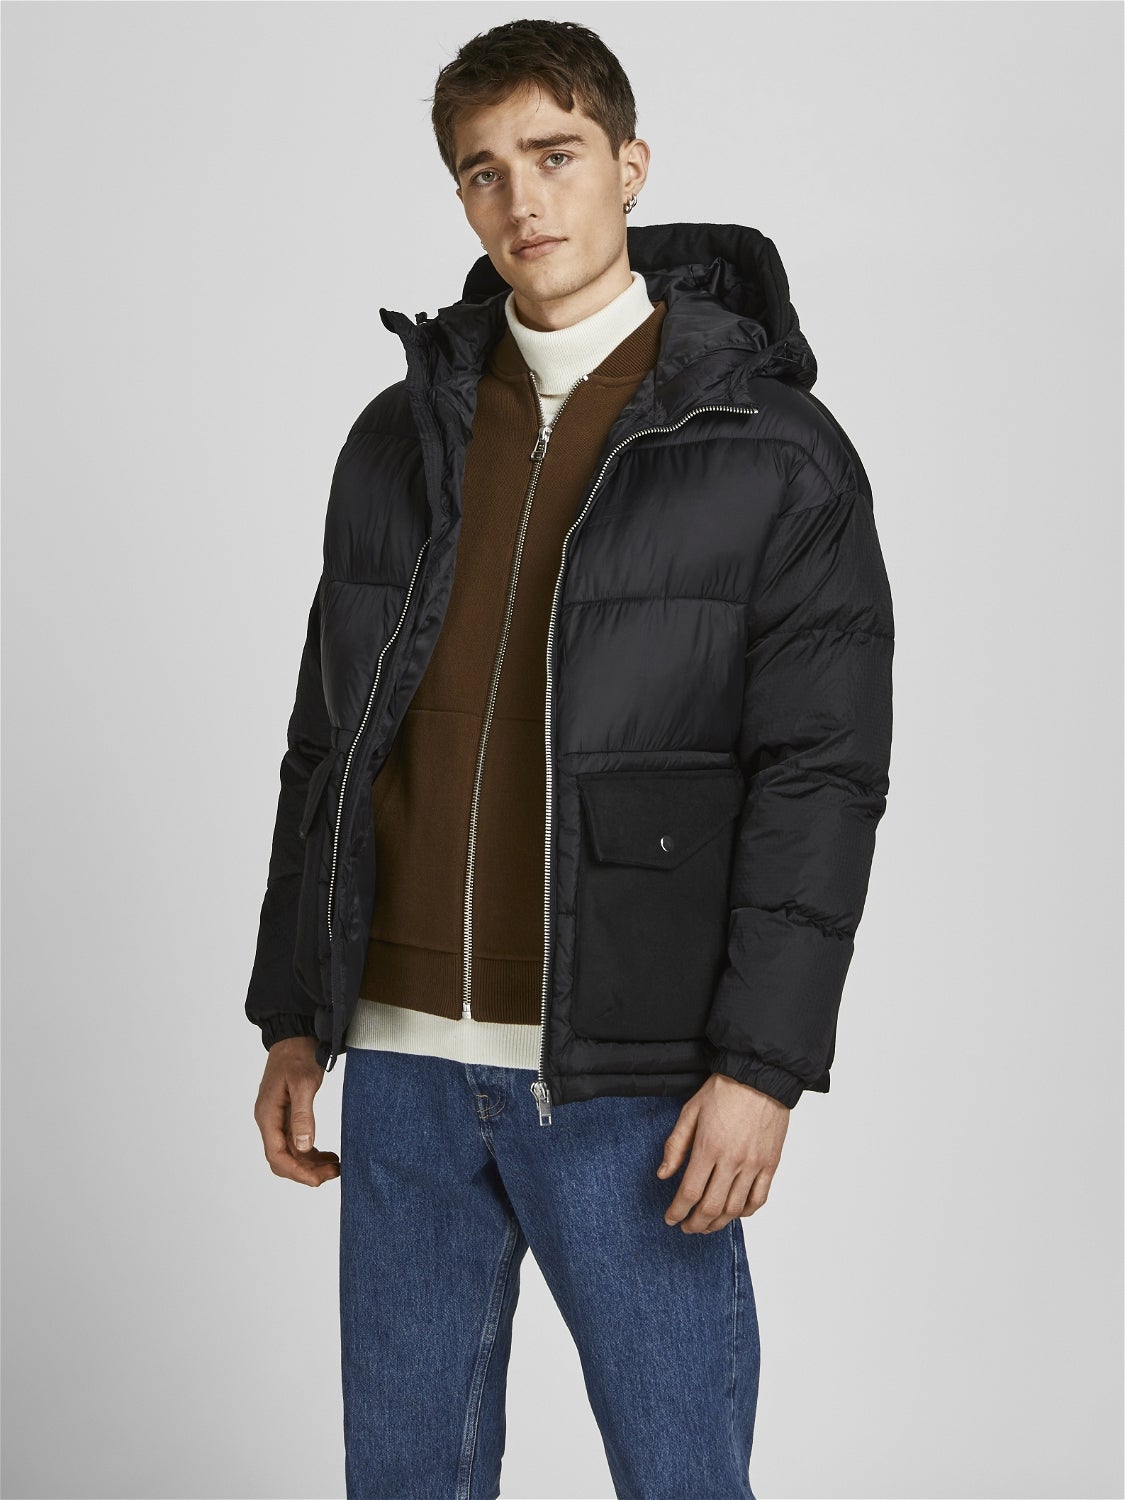 MEN FASHION Coats Casual Blue L discount 57% Jack & Jones Puffer jacket 